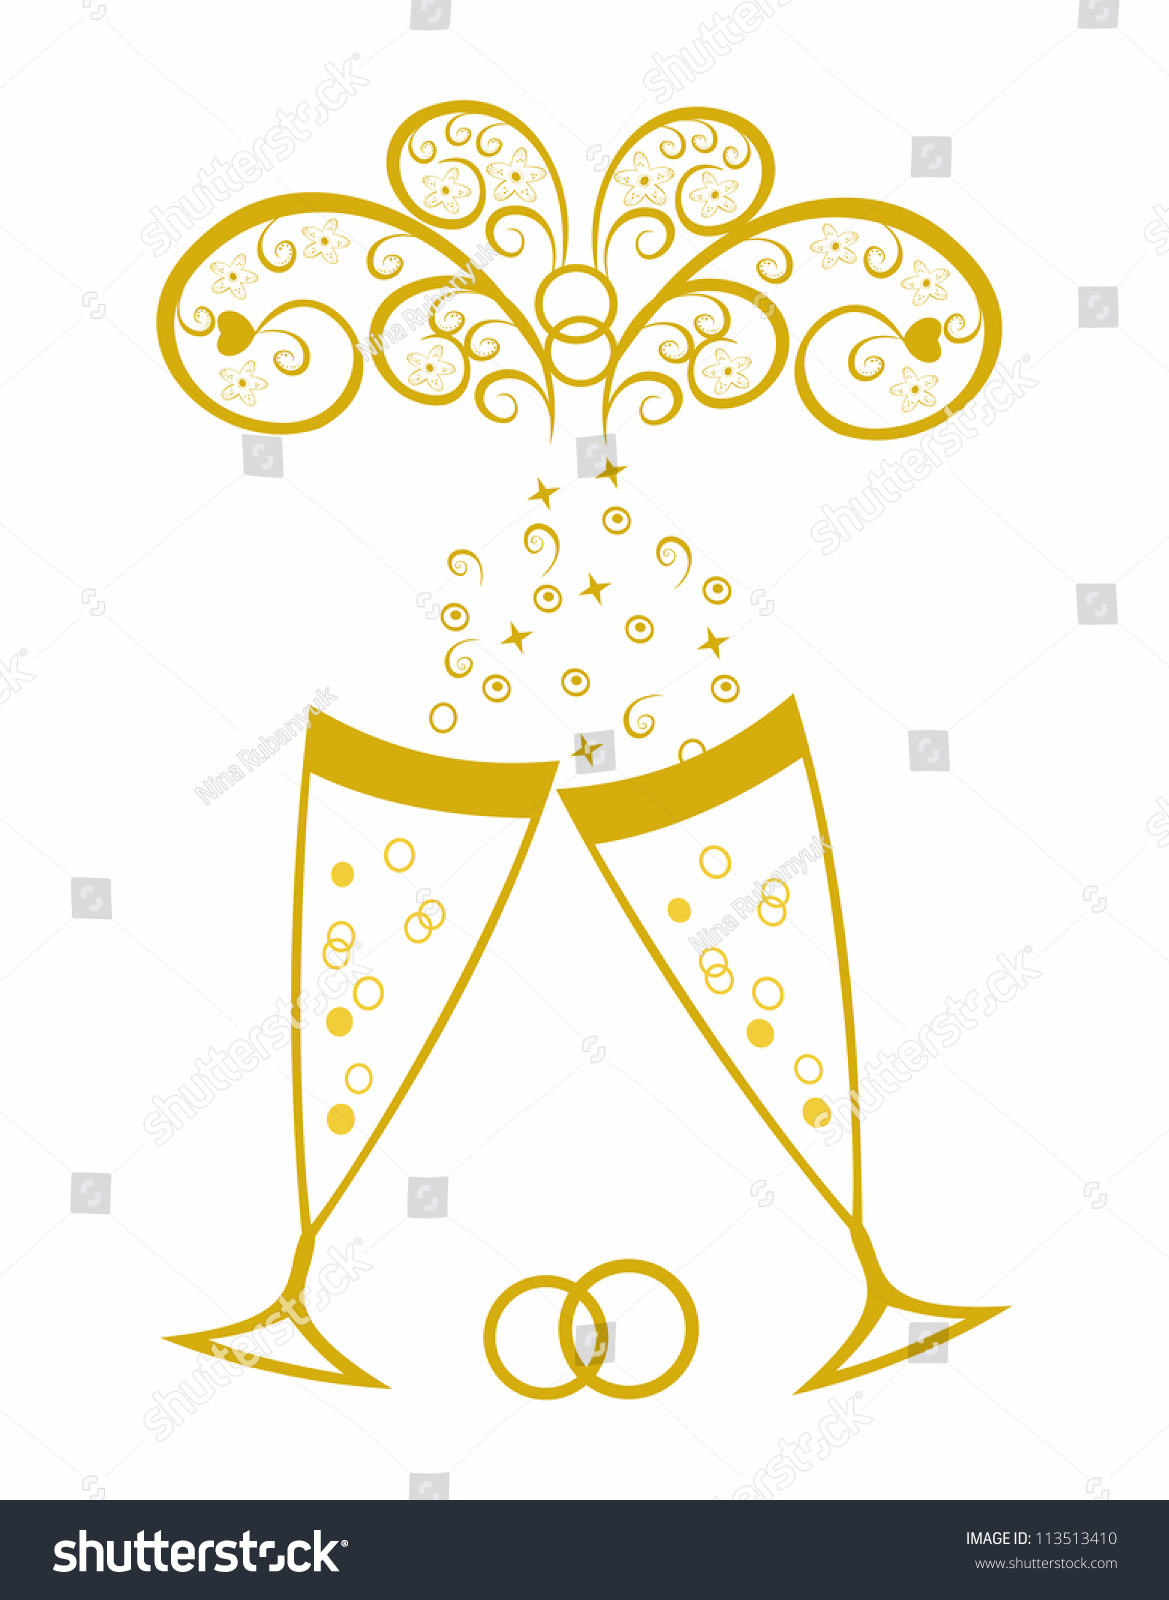 Download Champagne Glassesgolden Wedding Celebrationeditable Scalable Vector Stock Vector 113513410 ...